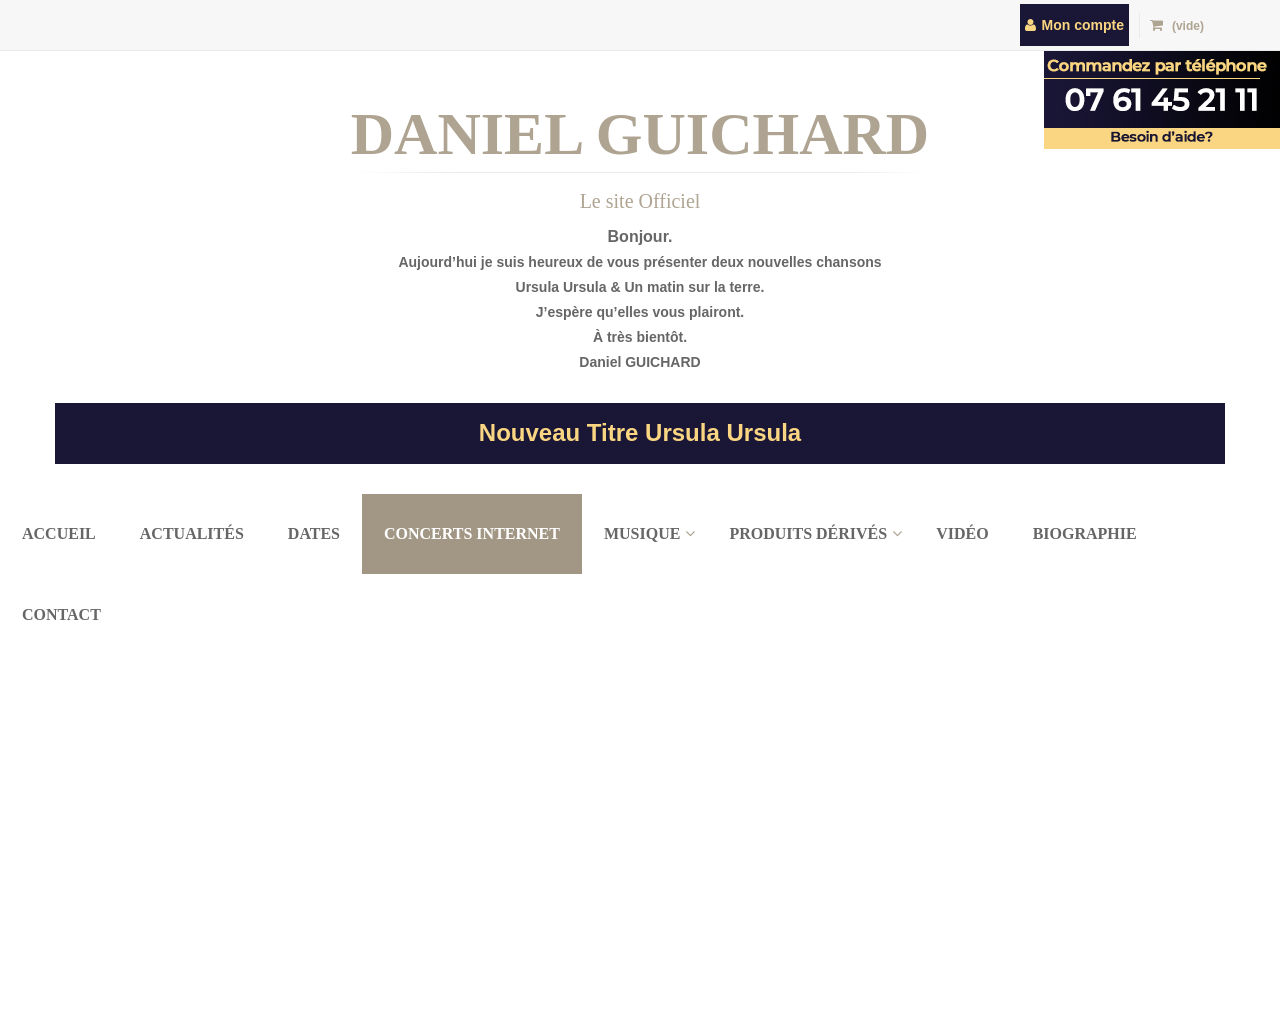 www.daniel-guichard.com